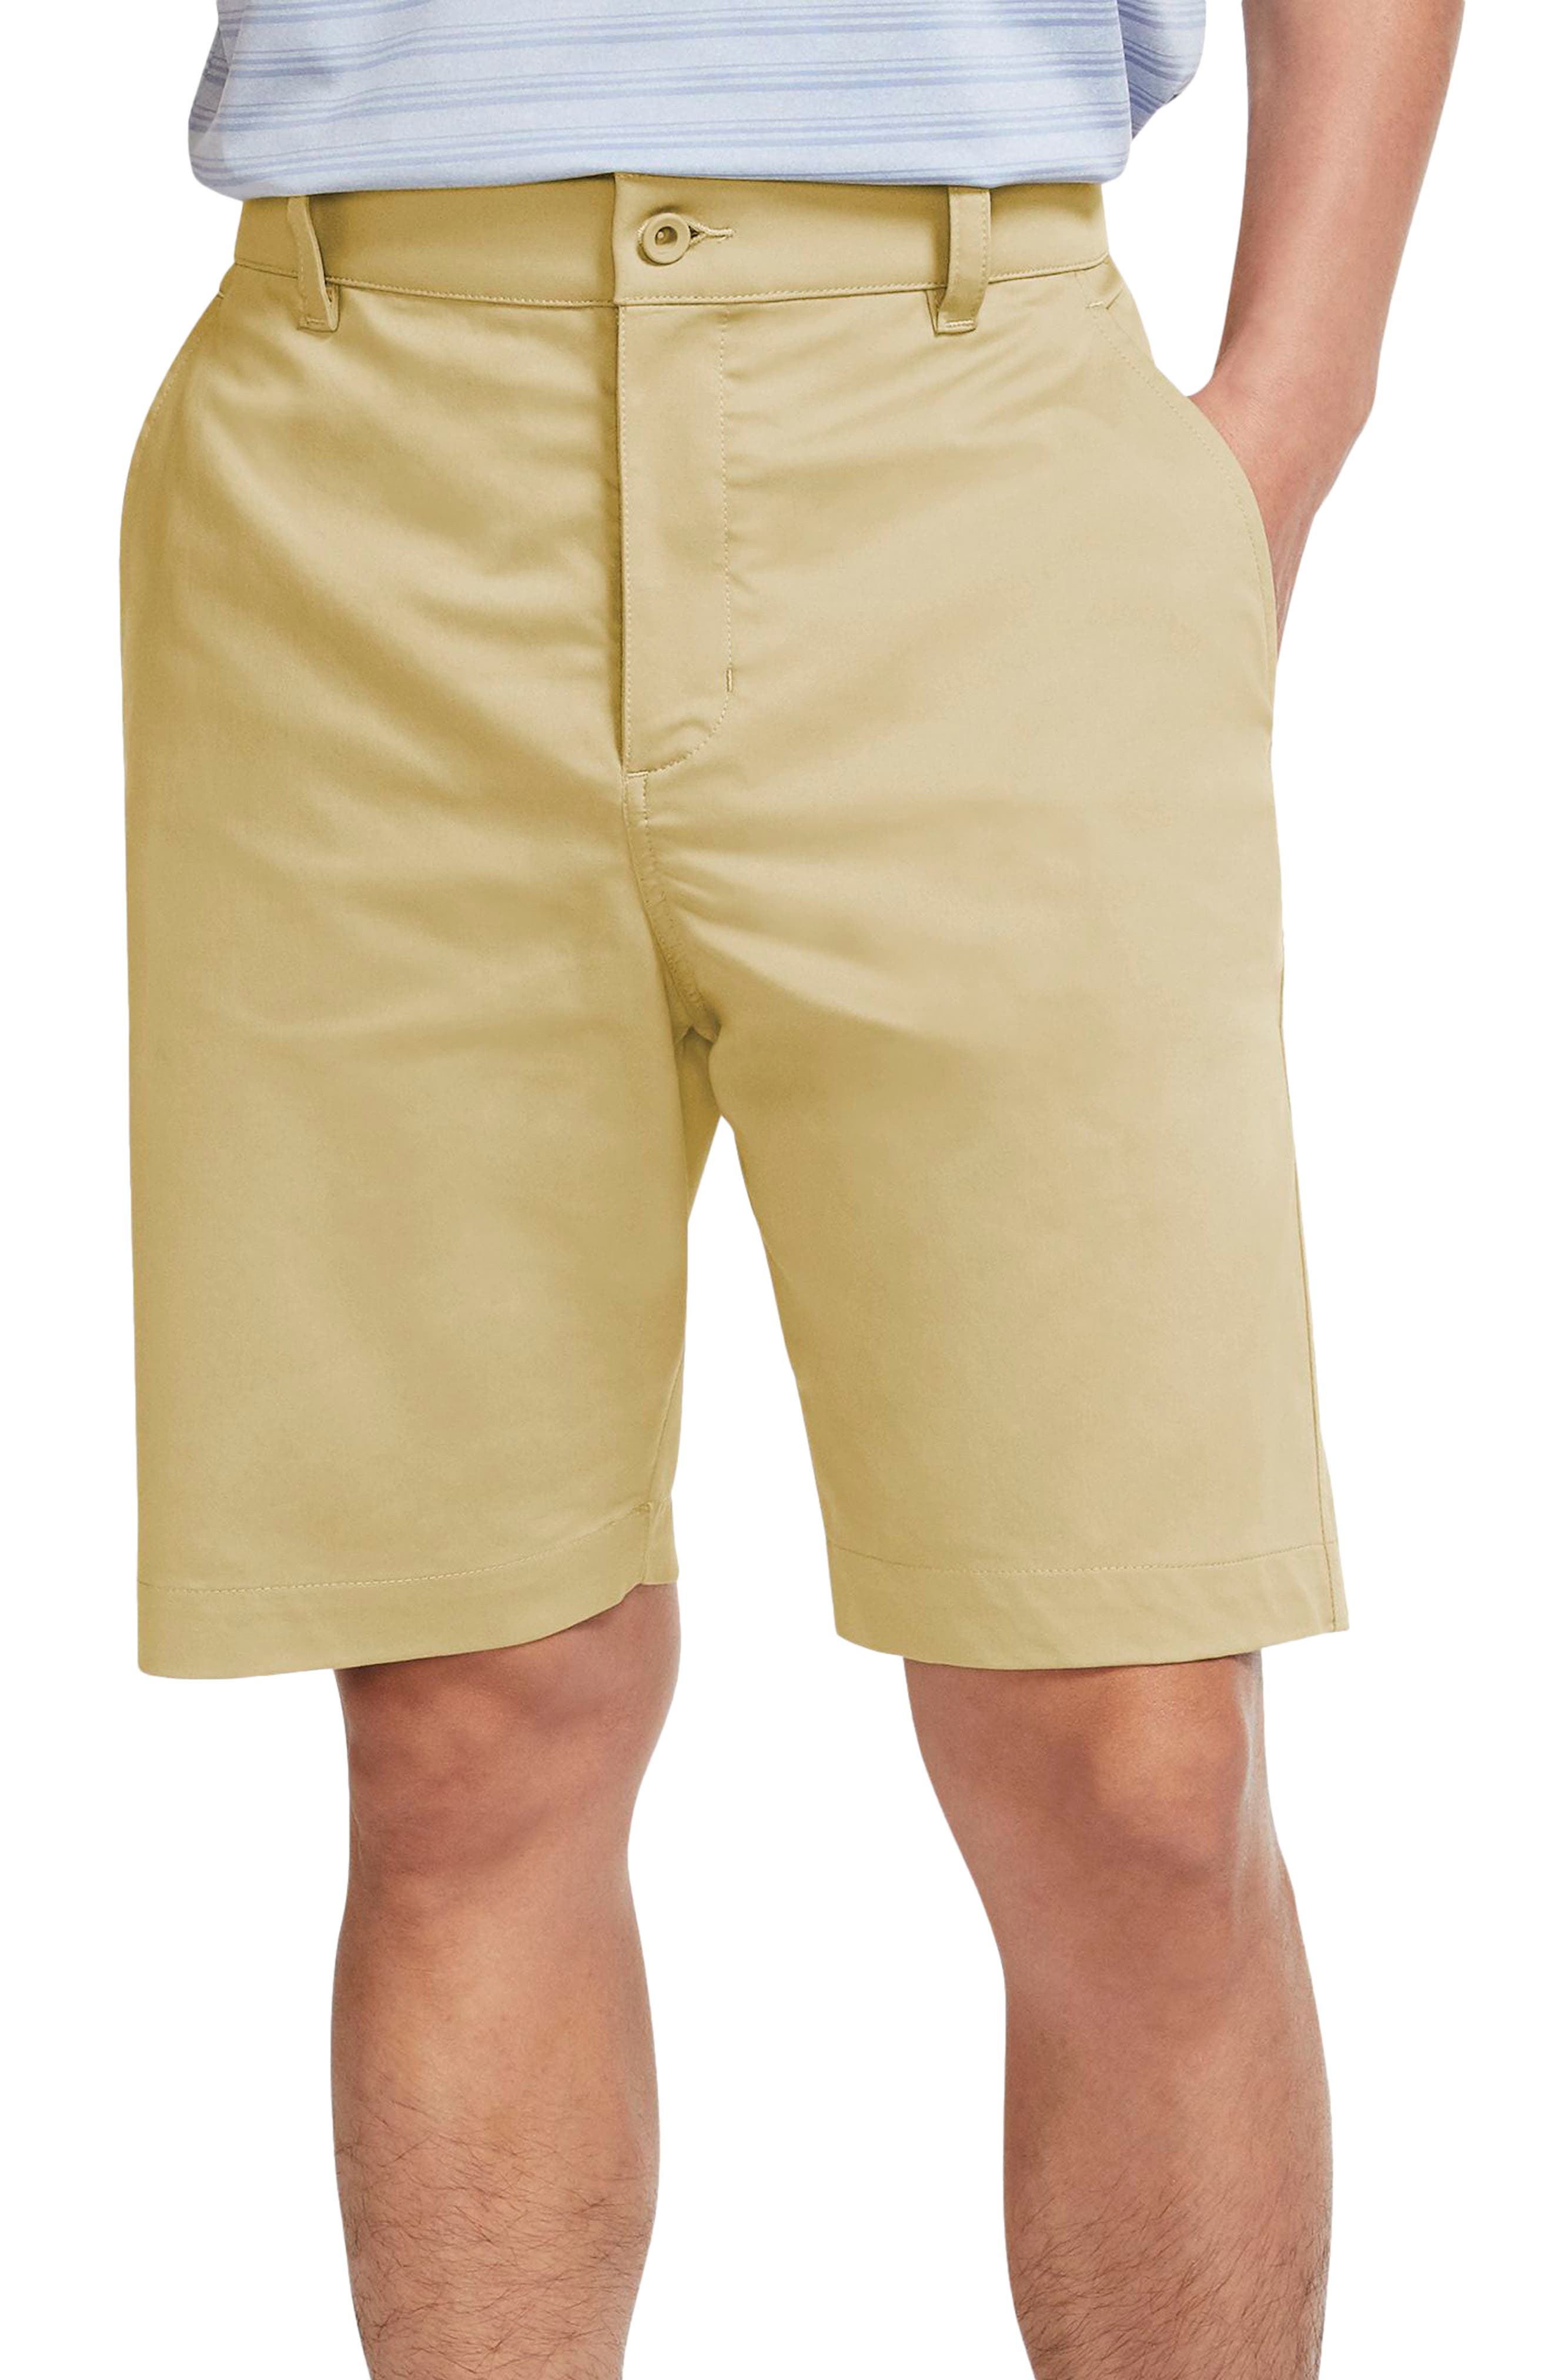 shorts yellow